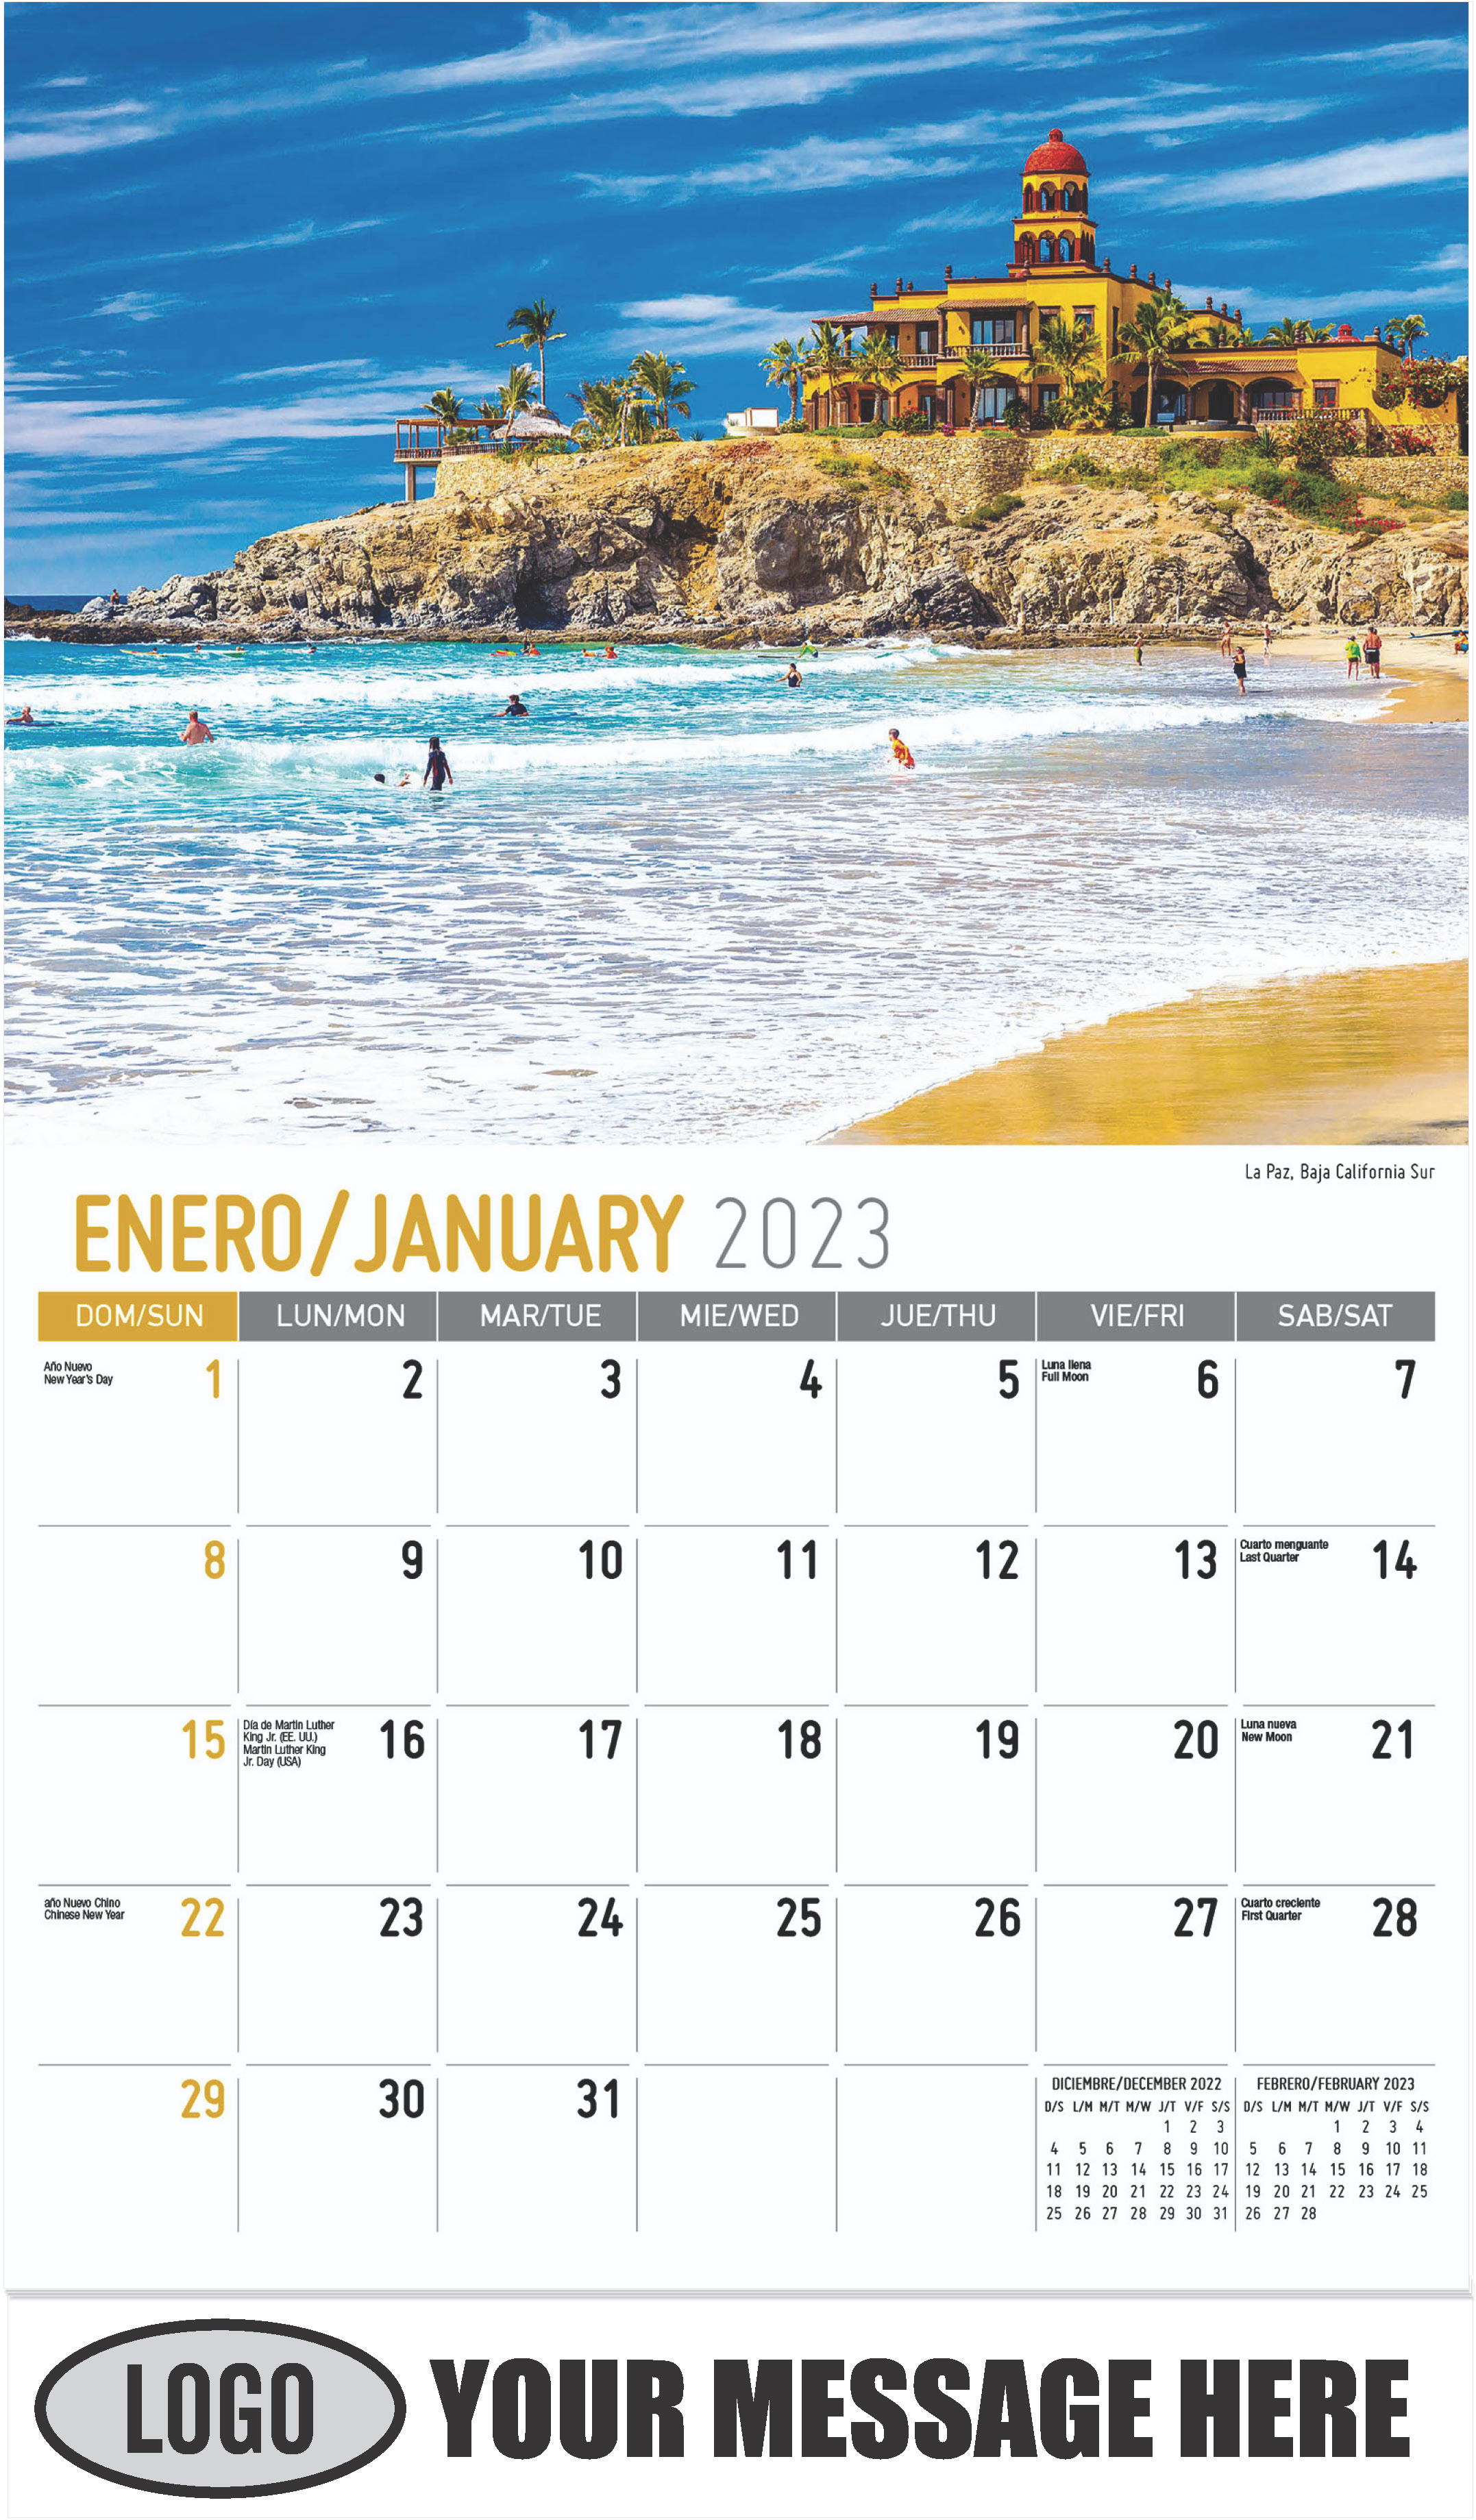 La Paz, Baja California Sur - January - Scenes of Mexico (Spanish-English bilingual) 2023 Promotional Calendar